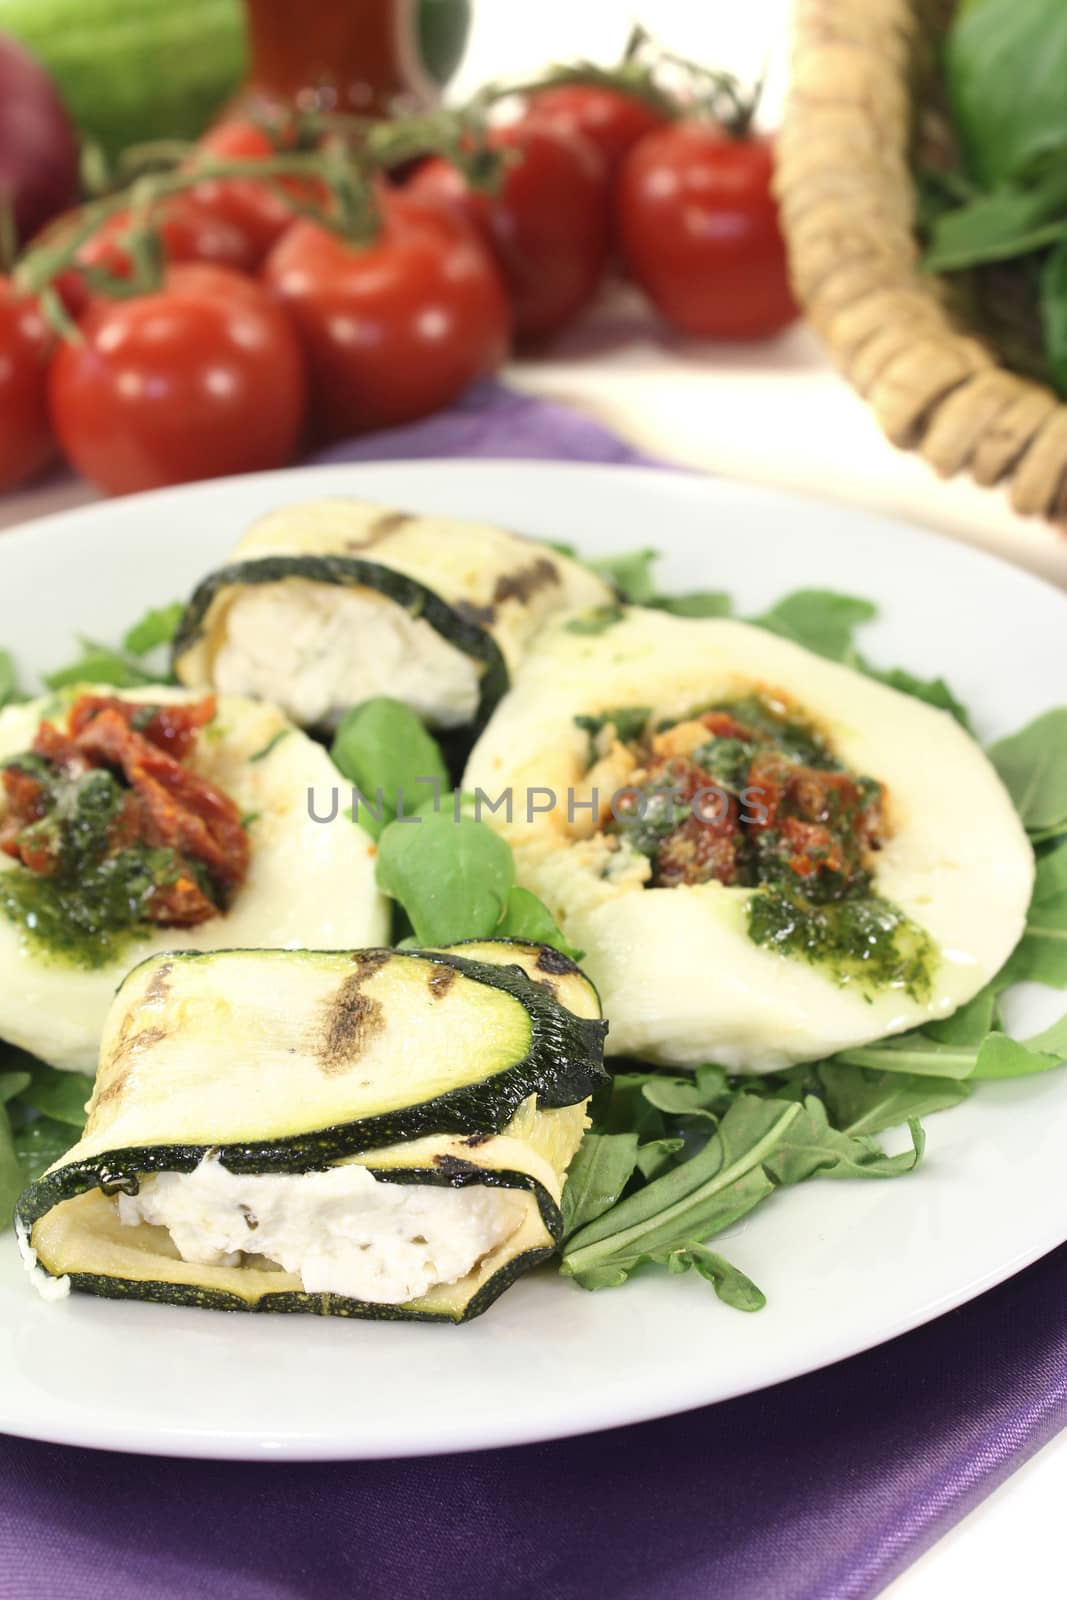 Zucchini rolls and stuffed mozzarella with basil on a light background